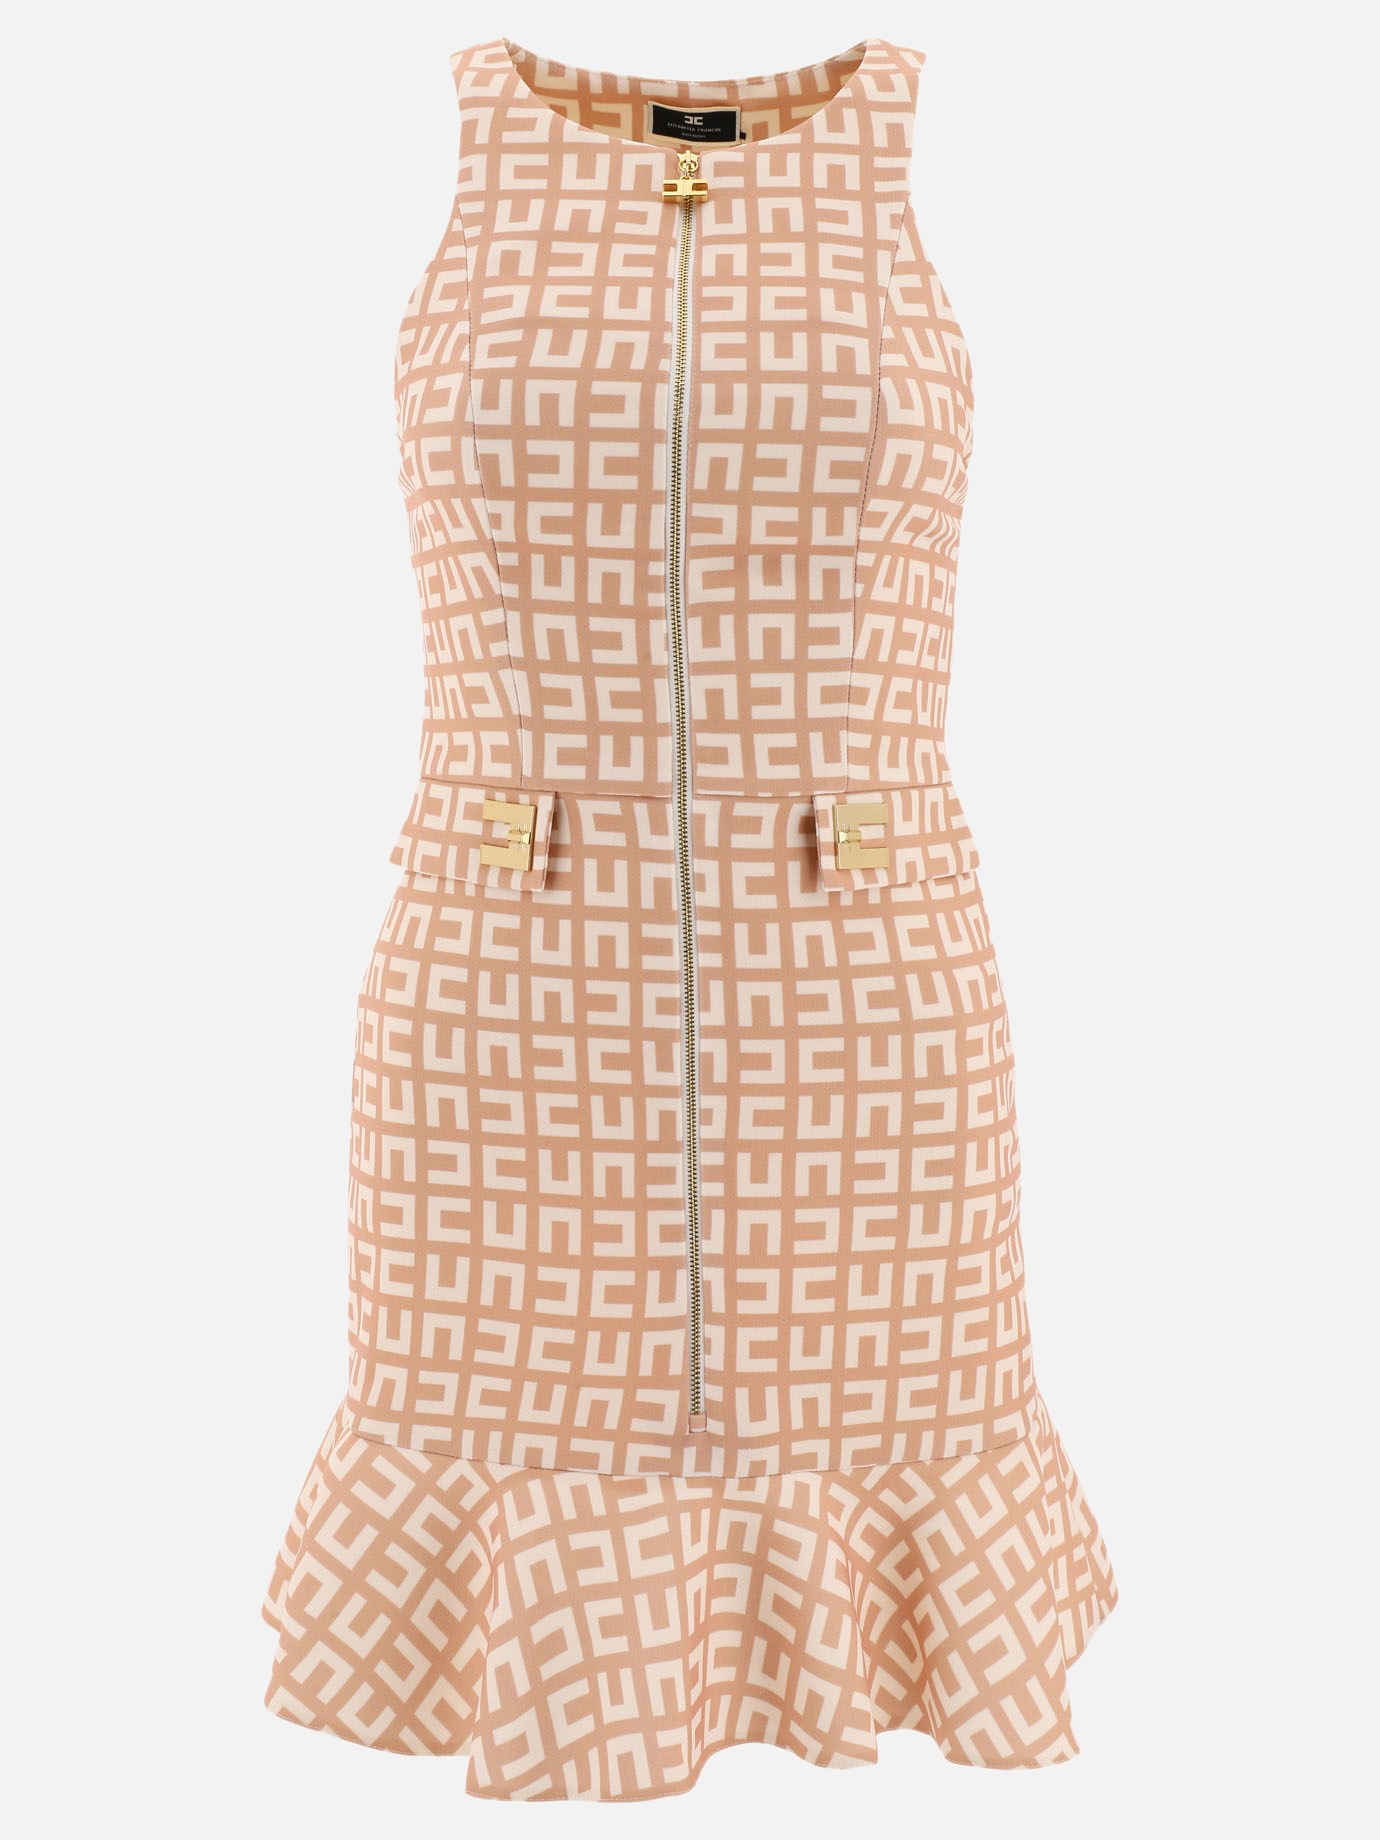 Maze pattern dress